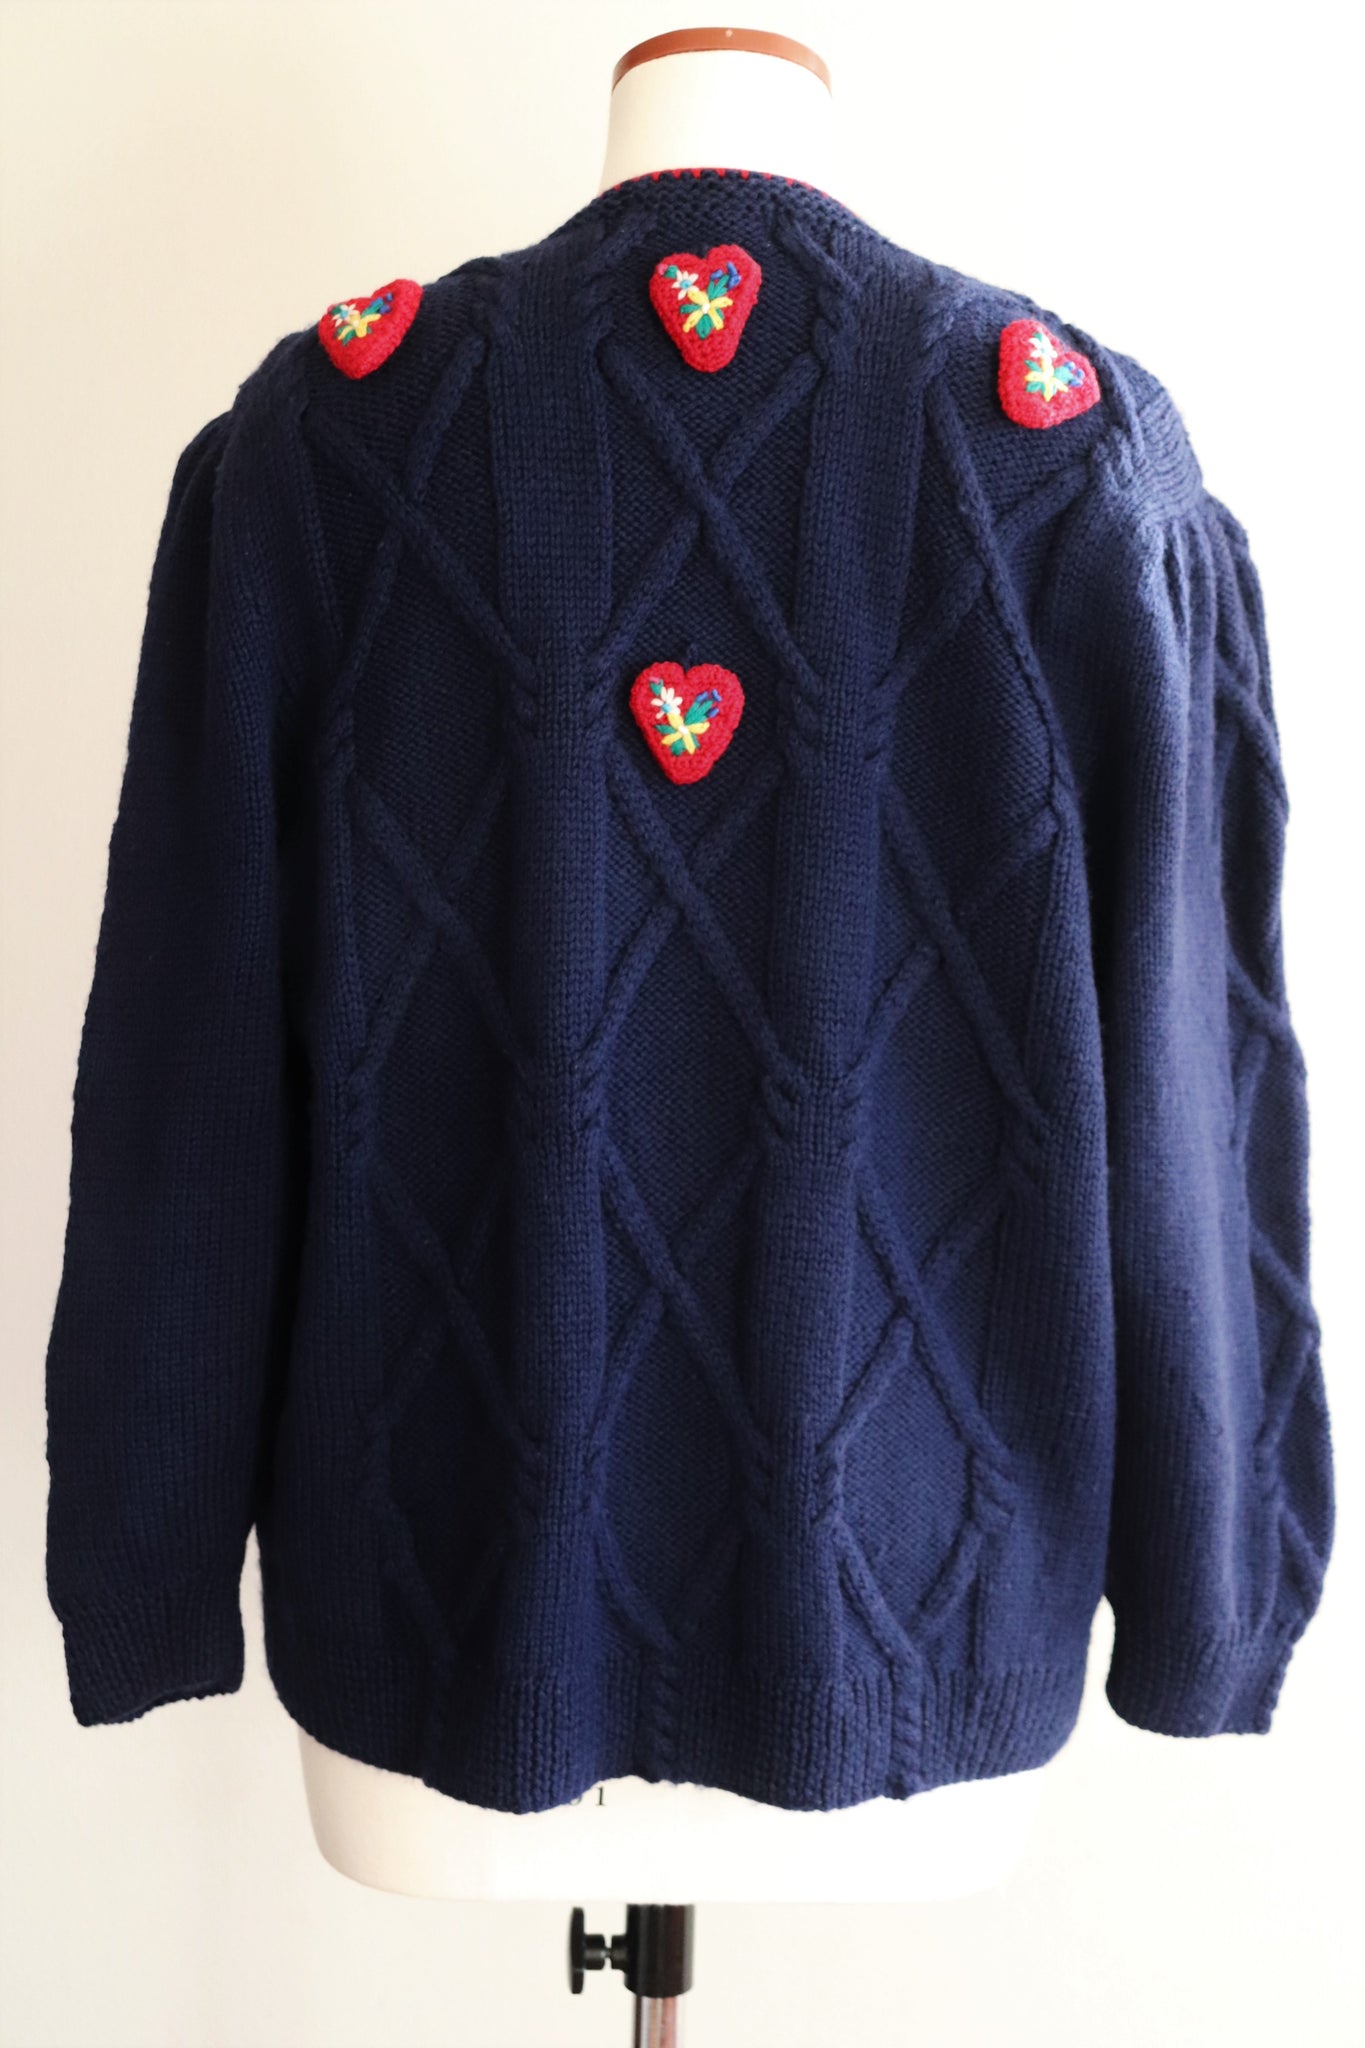 Austrian Hand Knit Navy Cardigan Heart Appliqué Flower Embroidered